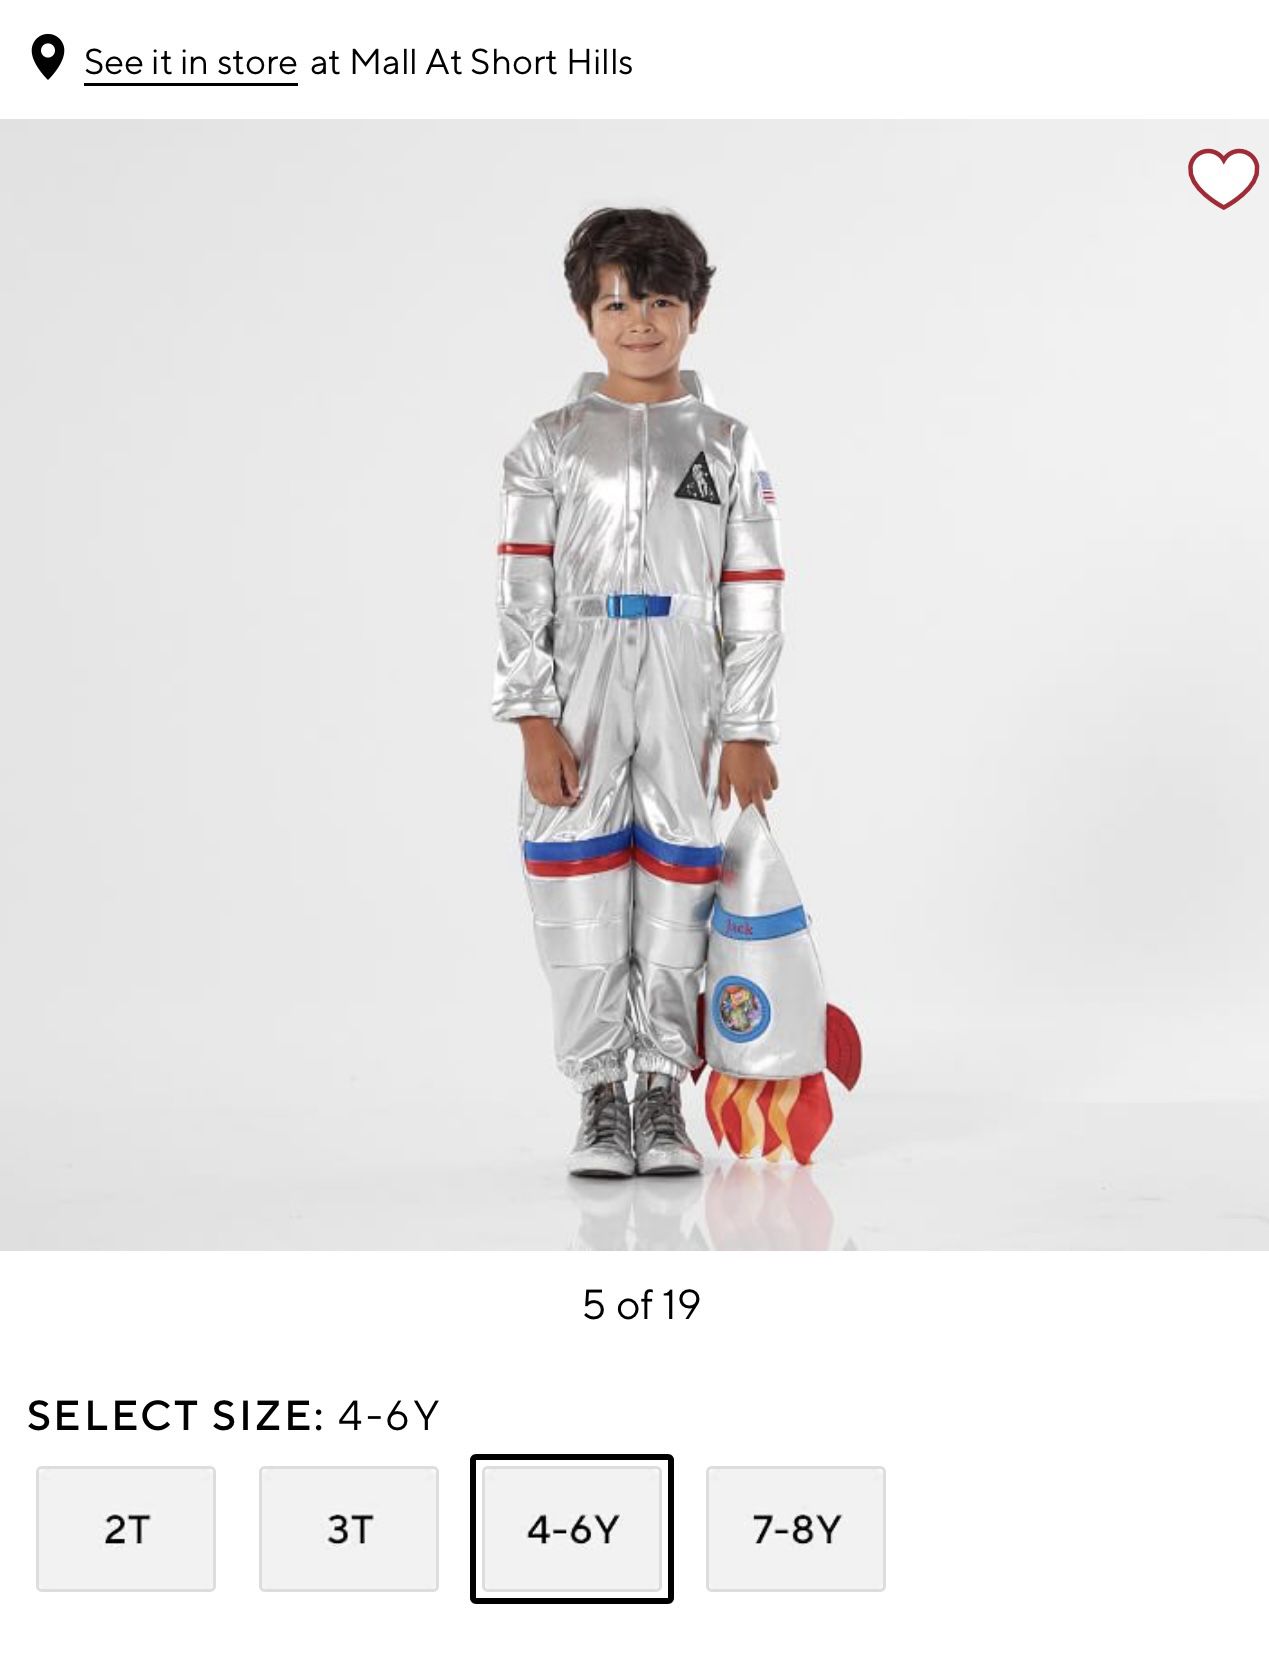 Pottery Barn Kids Astronaut Costume- NEW 